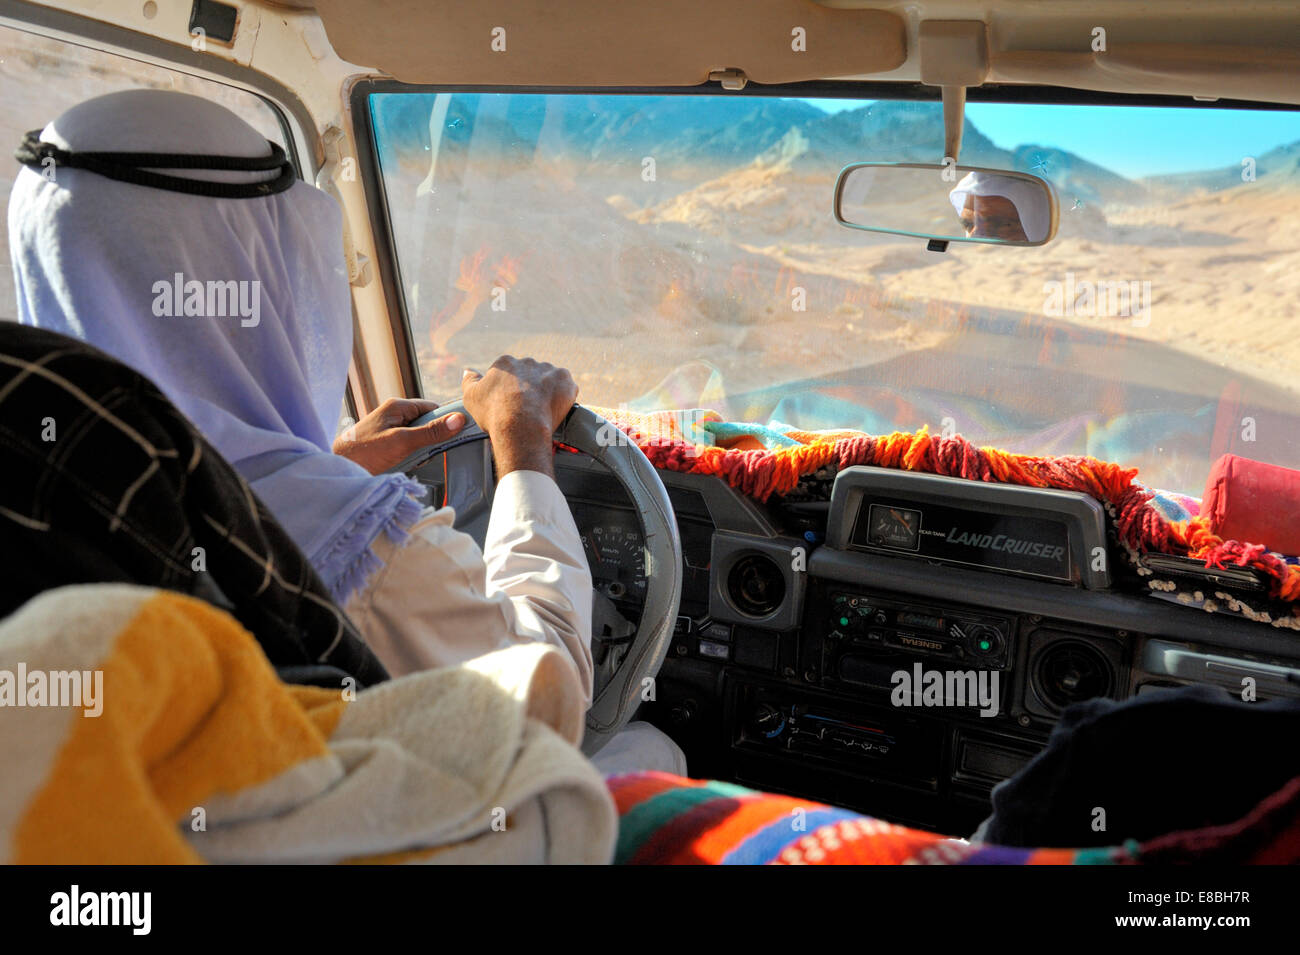 Bedouin man driving LandCruiser across desert south Sinai Peninsula, Egypt. Wearing robe and kufeya with igal headwear Stock Photo